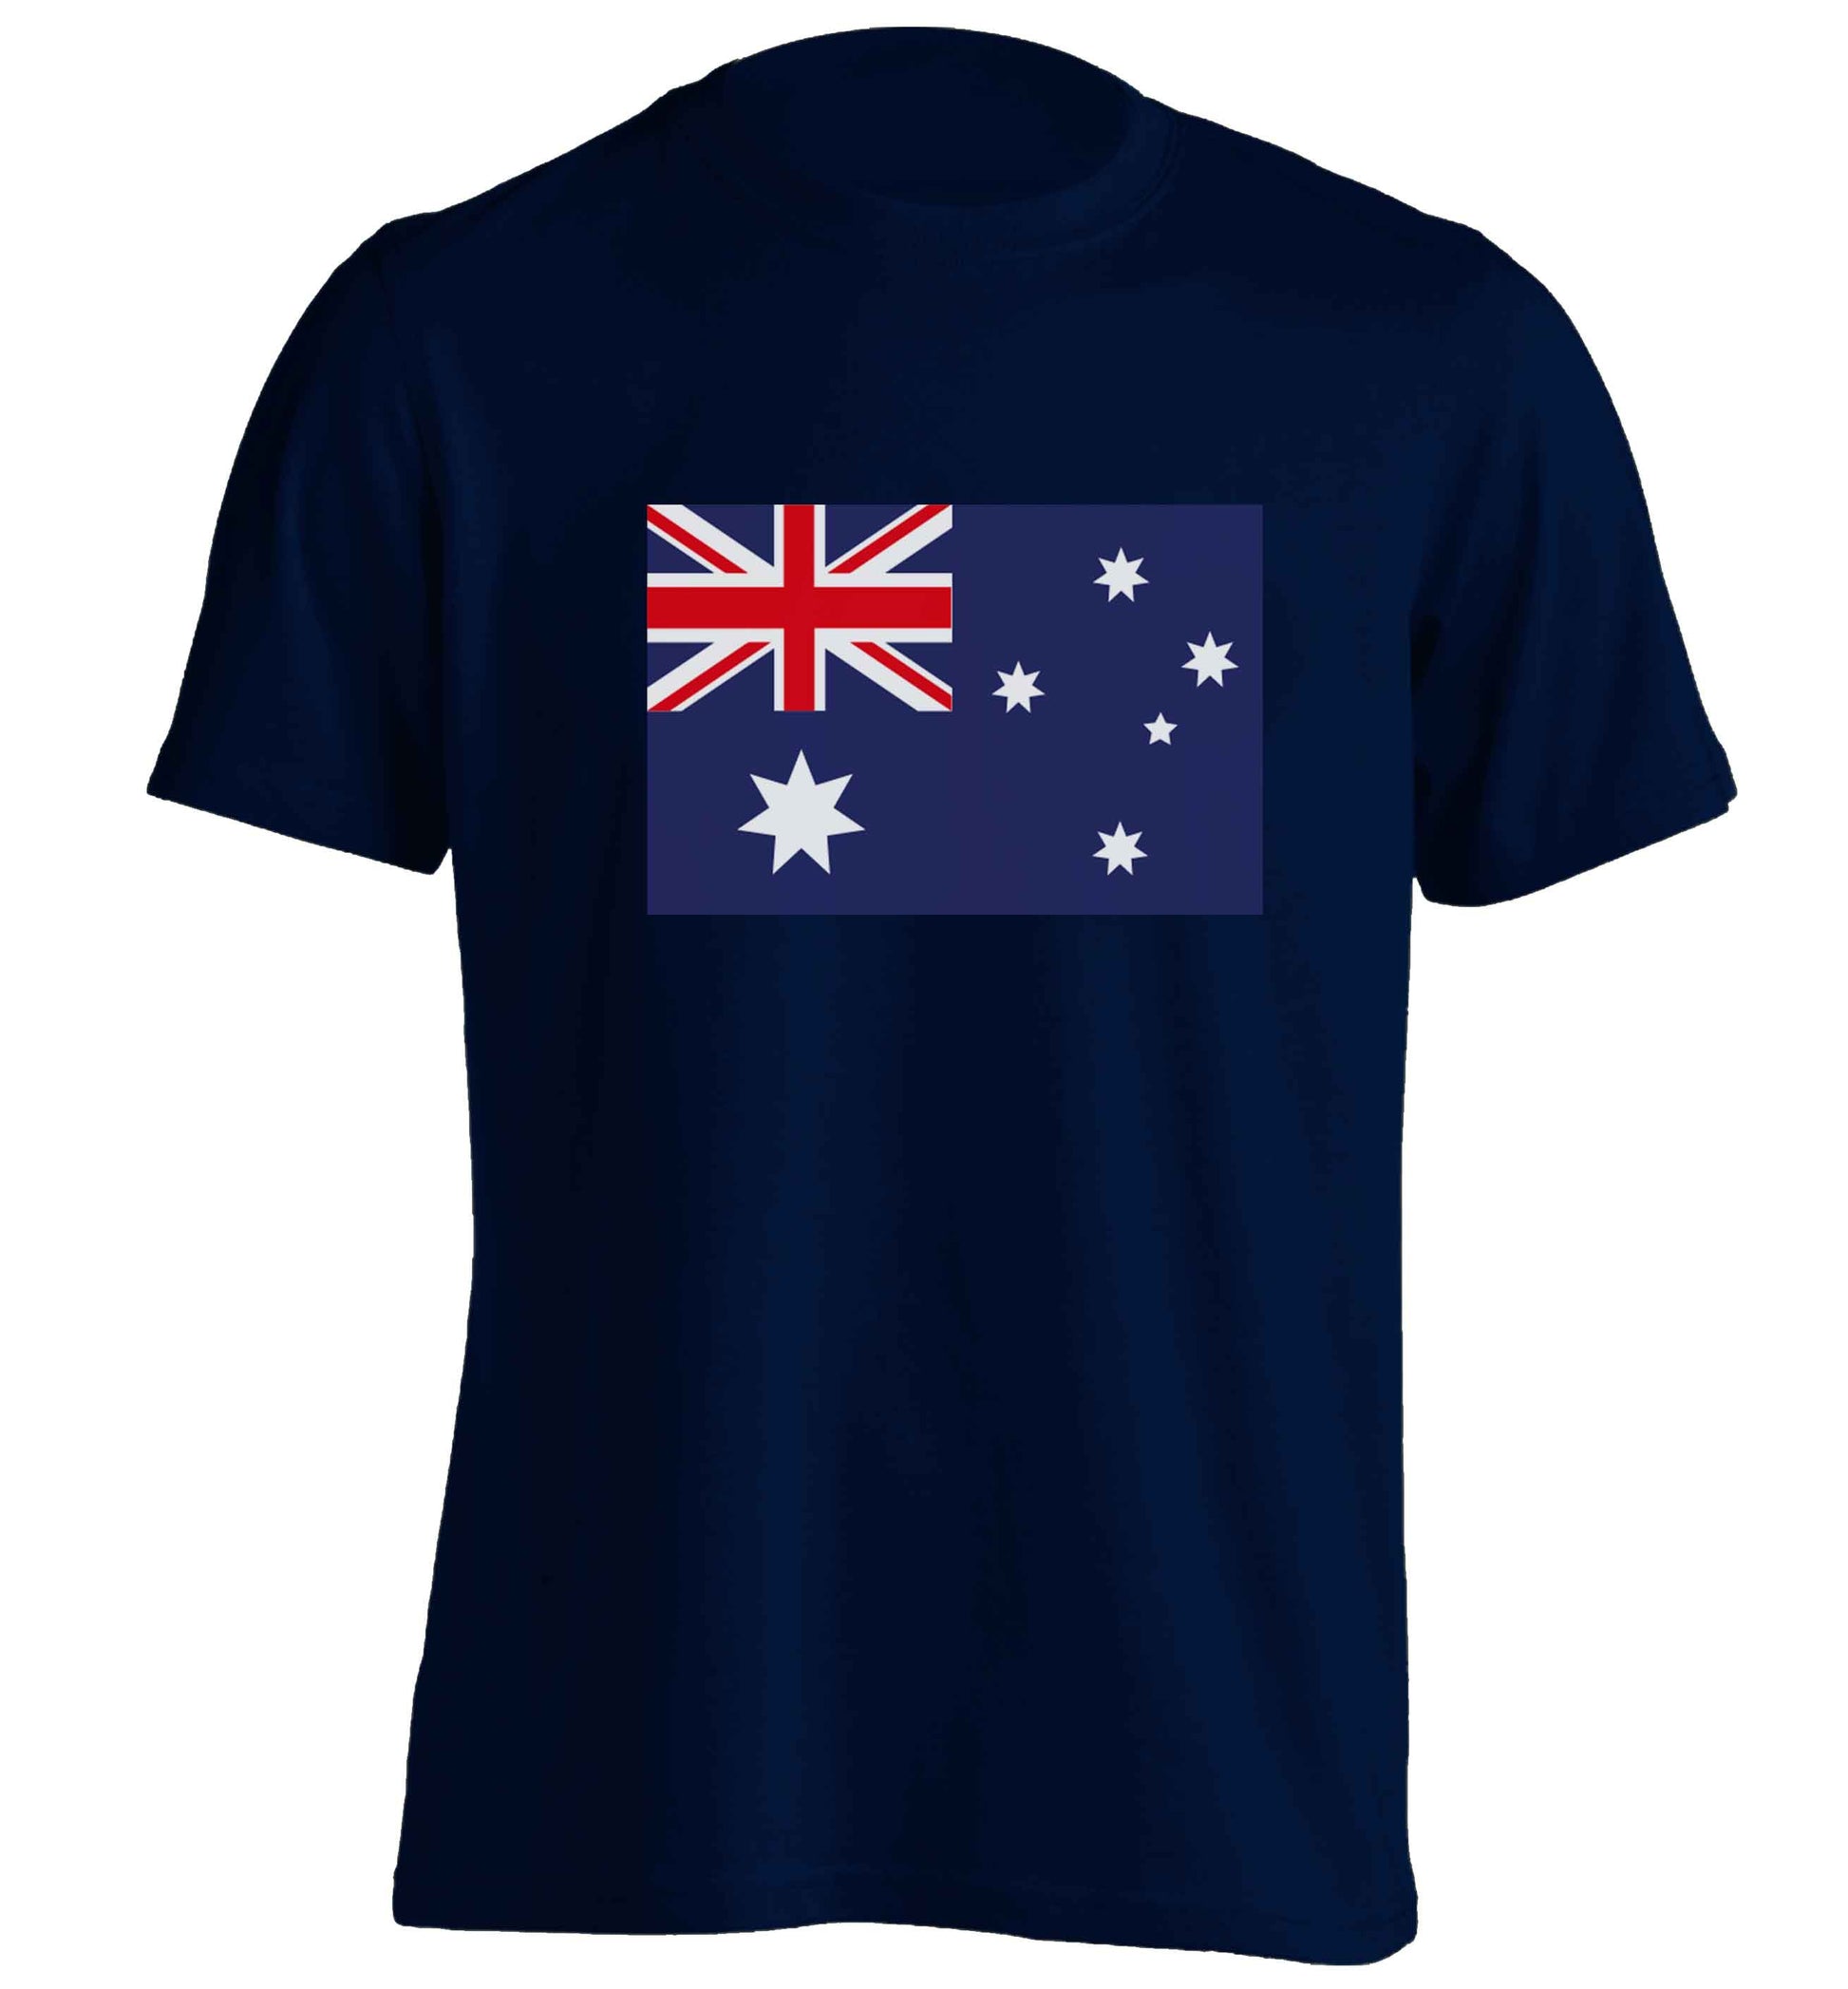 Australian Flag adults unisex navy Tshirt 2XL